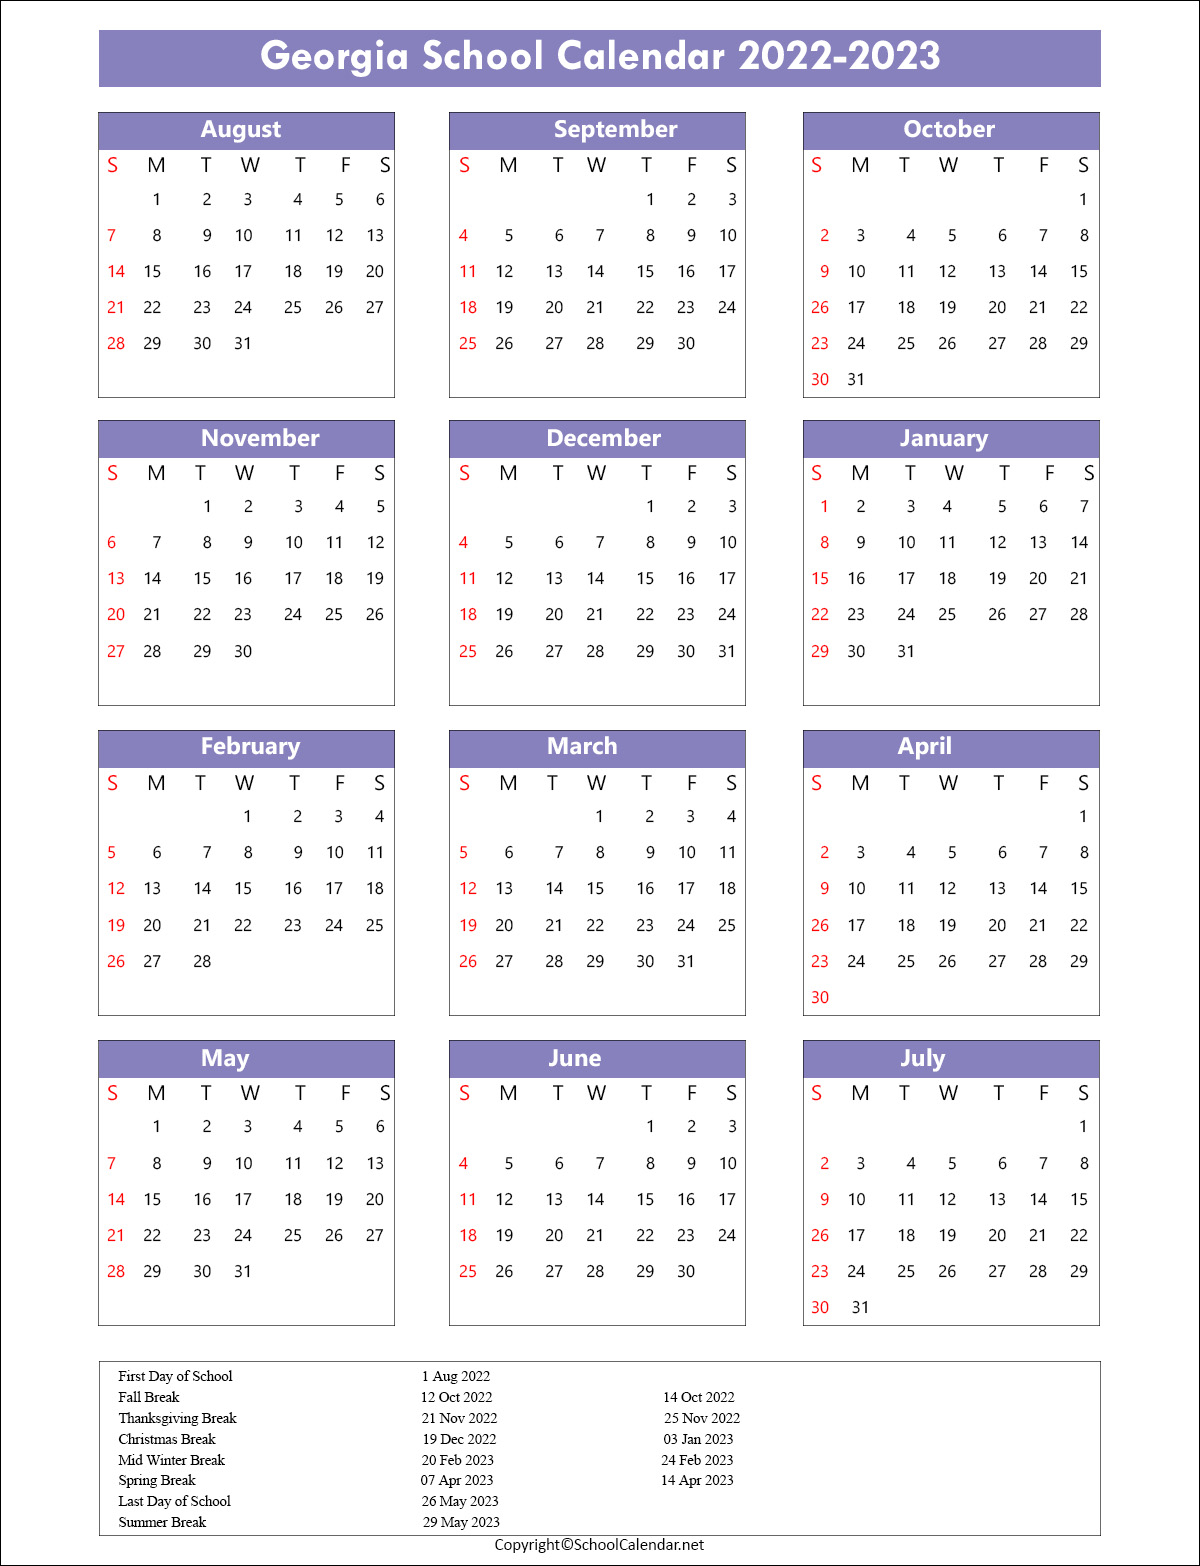 Georgia School Calendar 2022